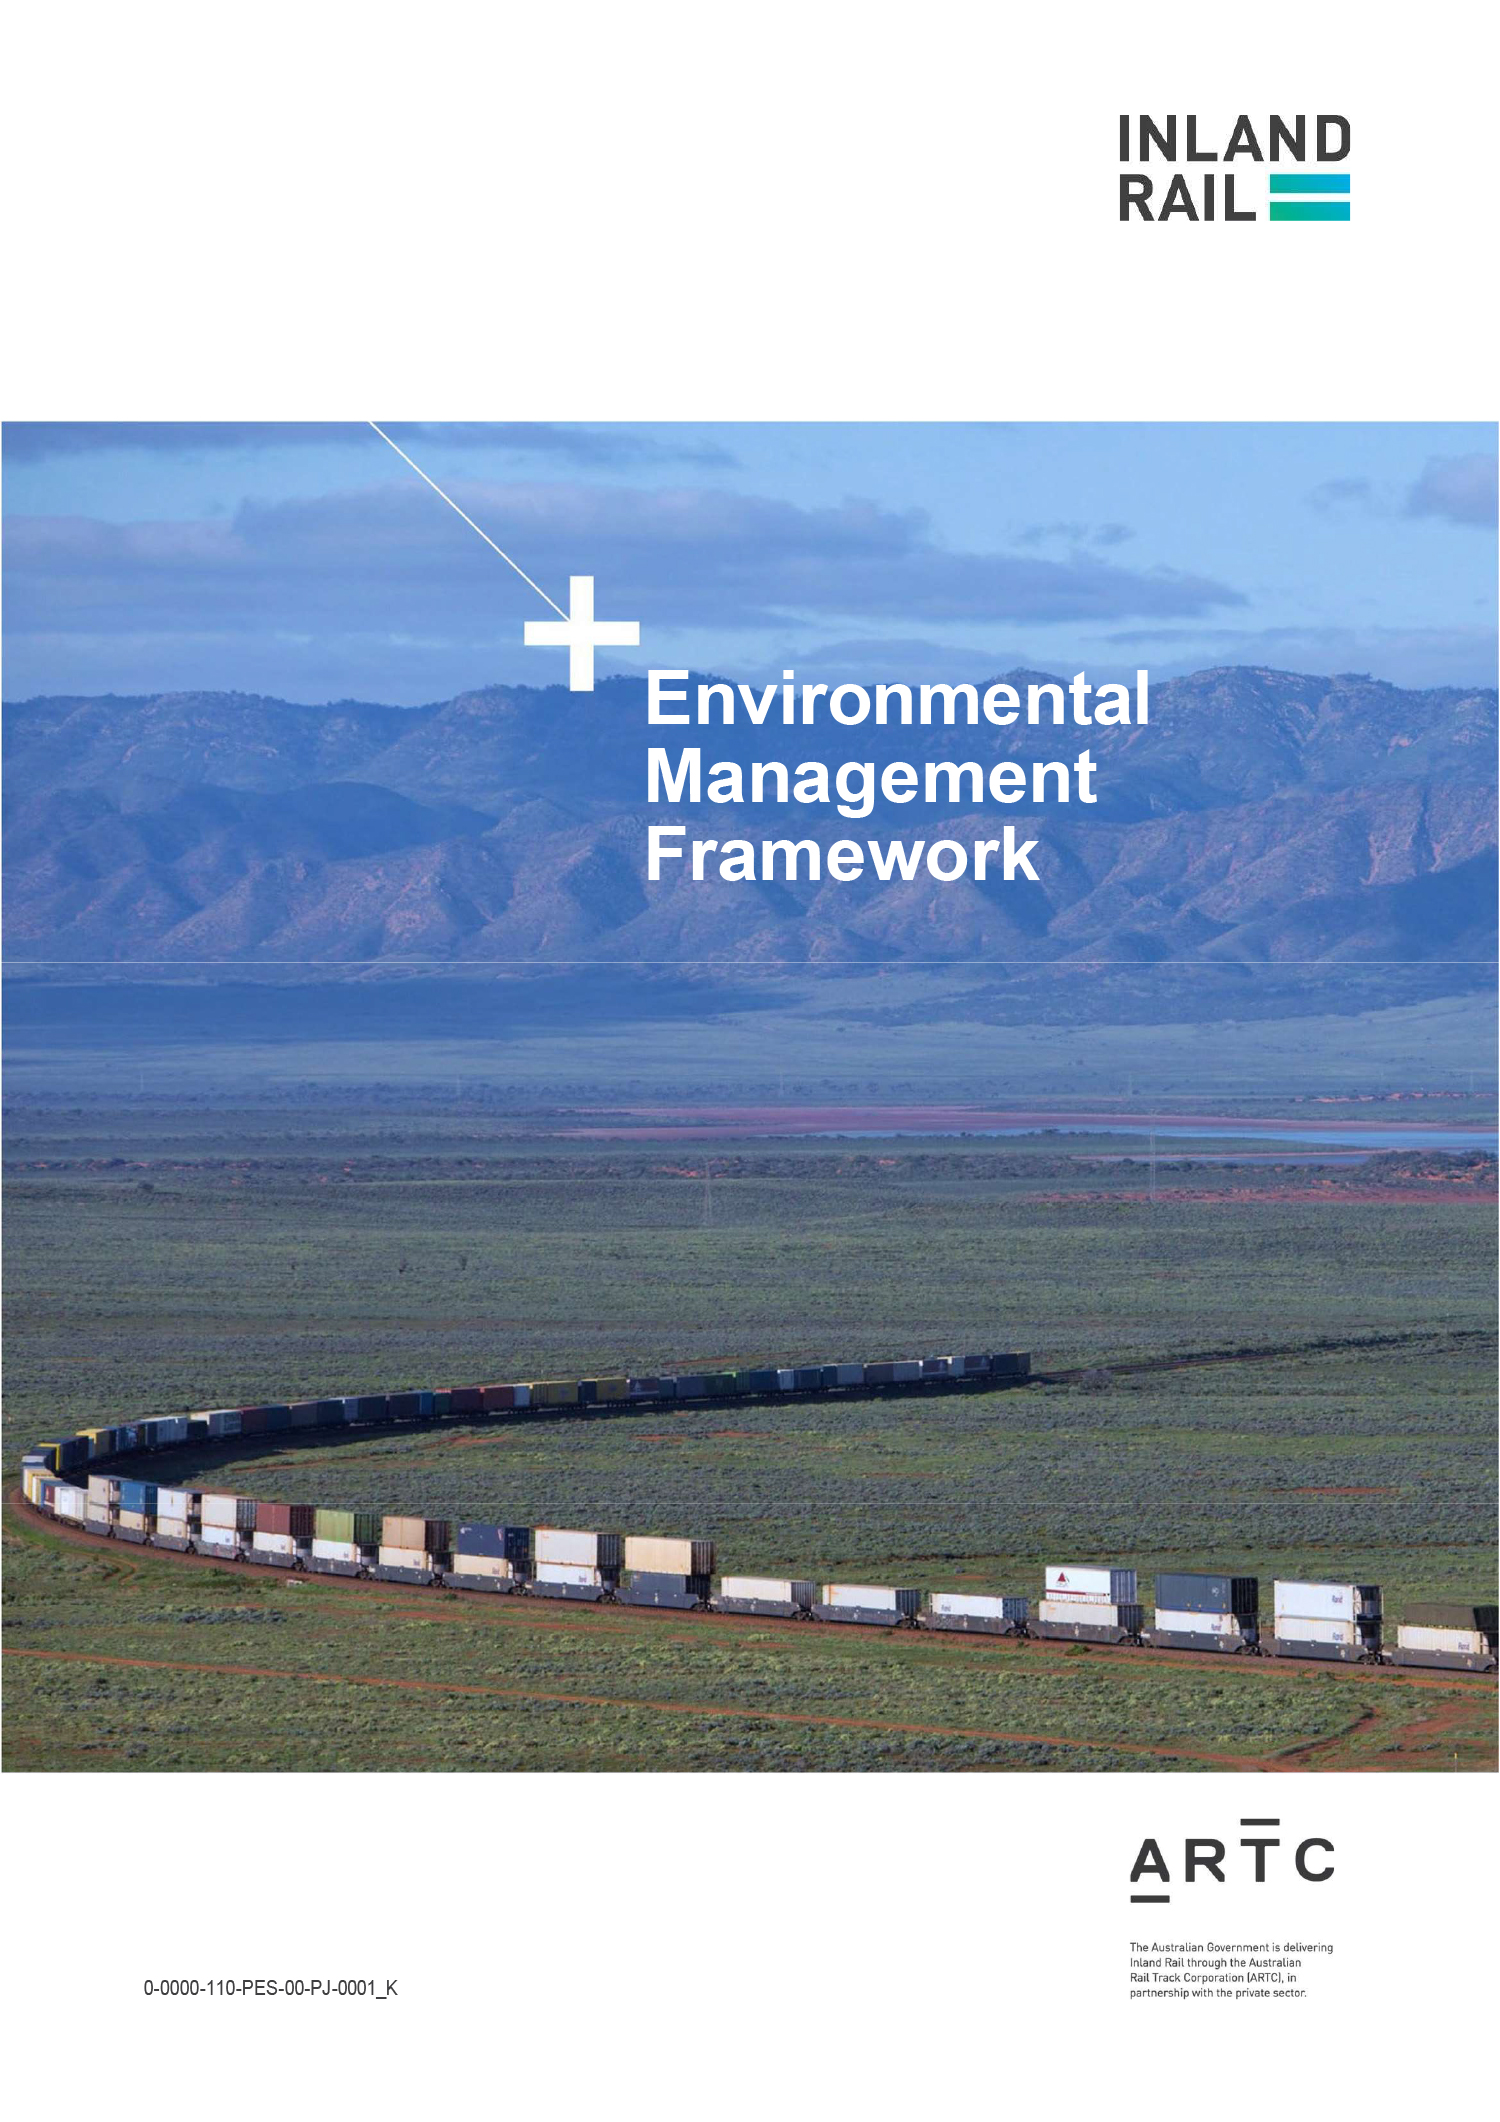 Thumbnail image for Inland Rail Environmental Management Framework document